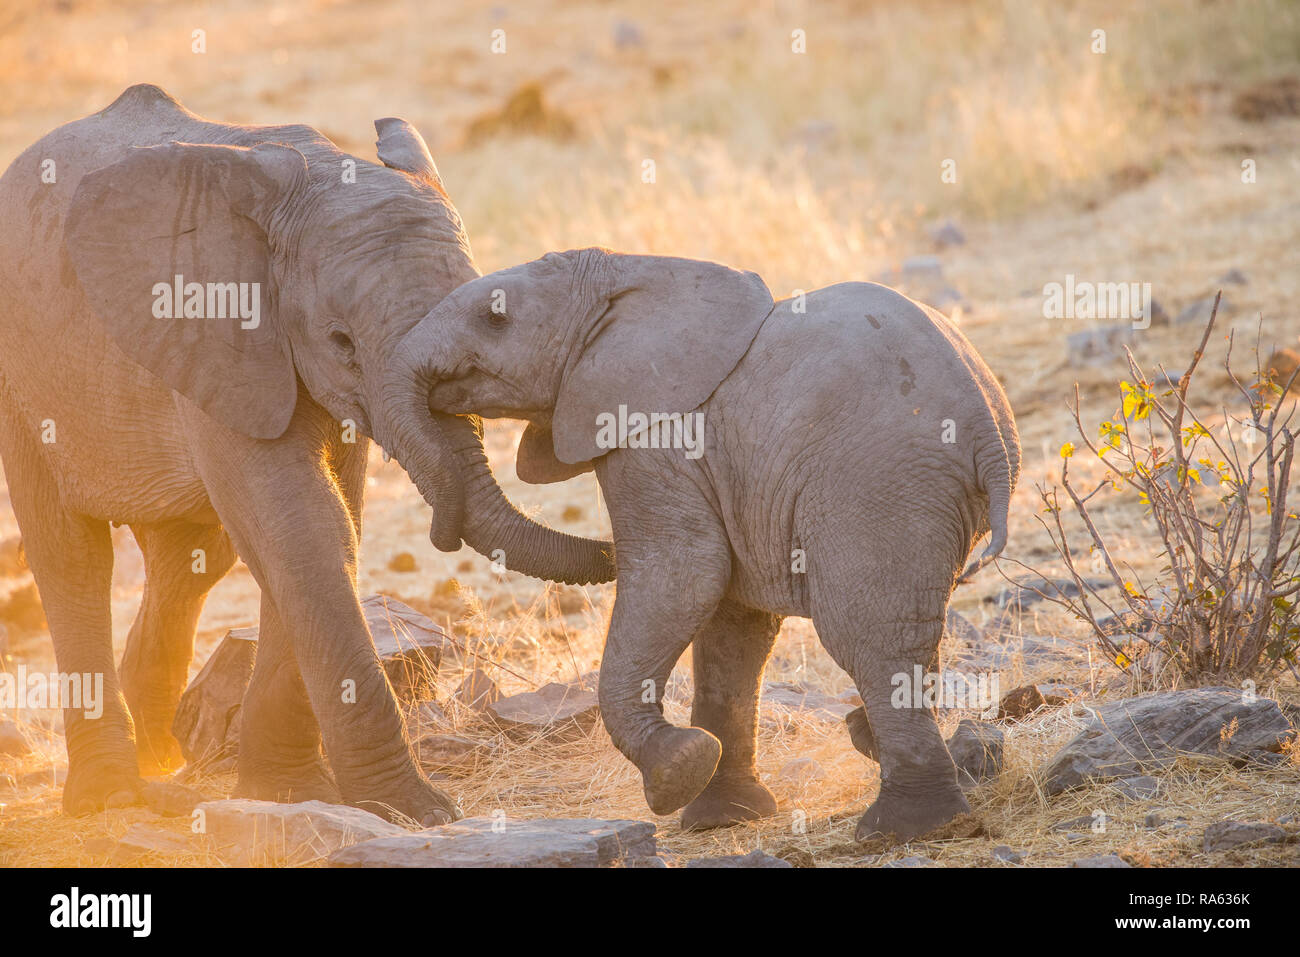 Small elephants playing Stock Photo